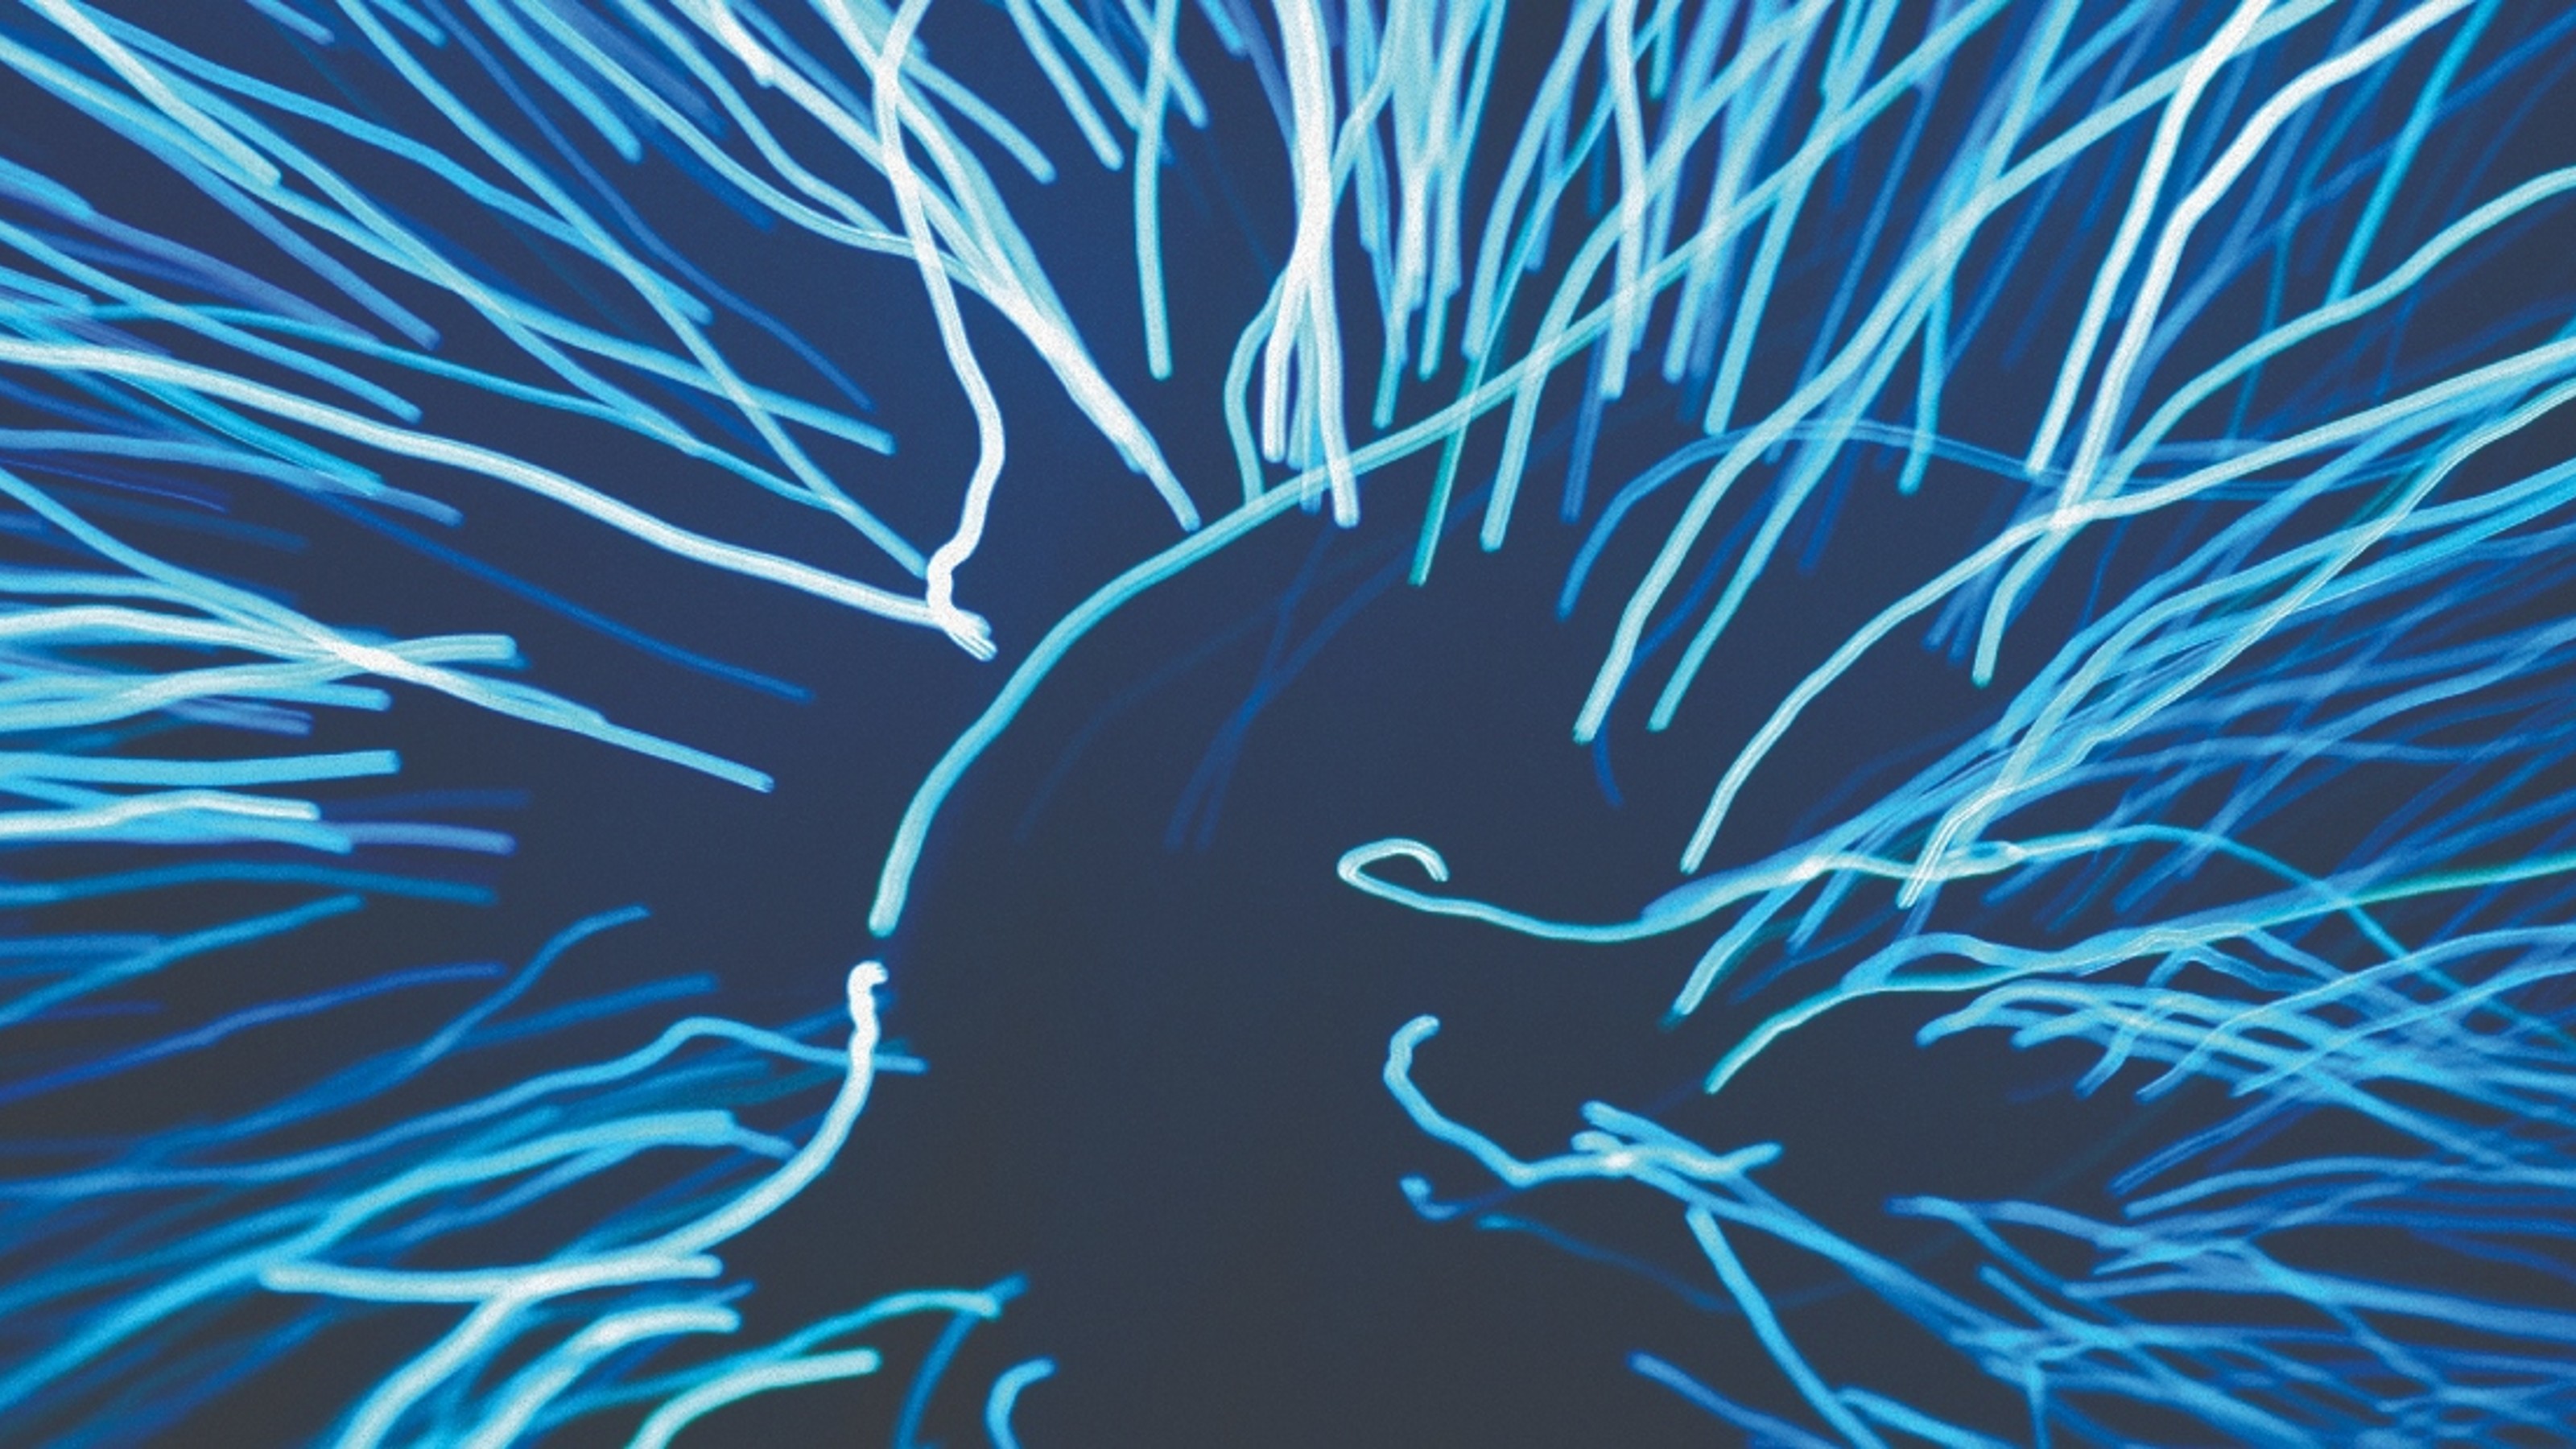 White spaghetti-looking filaments on dark blue background